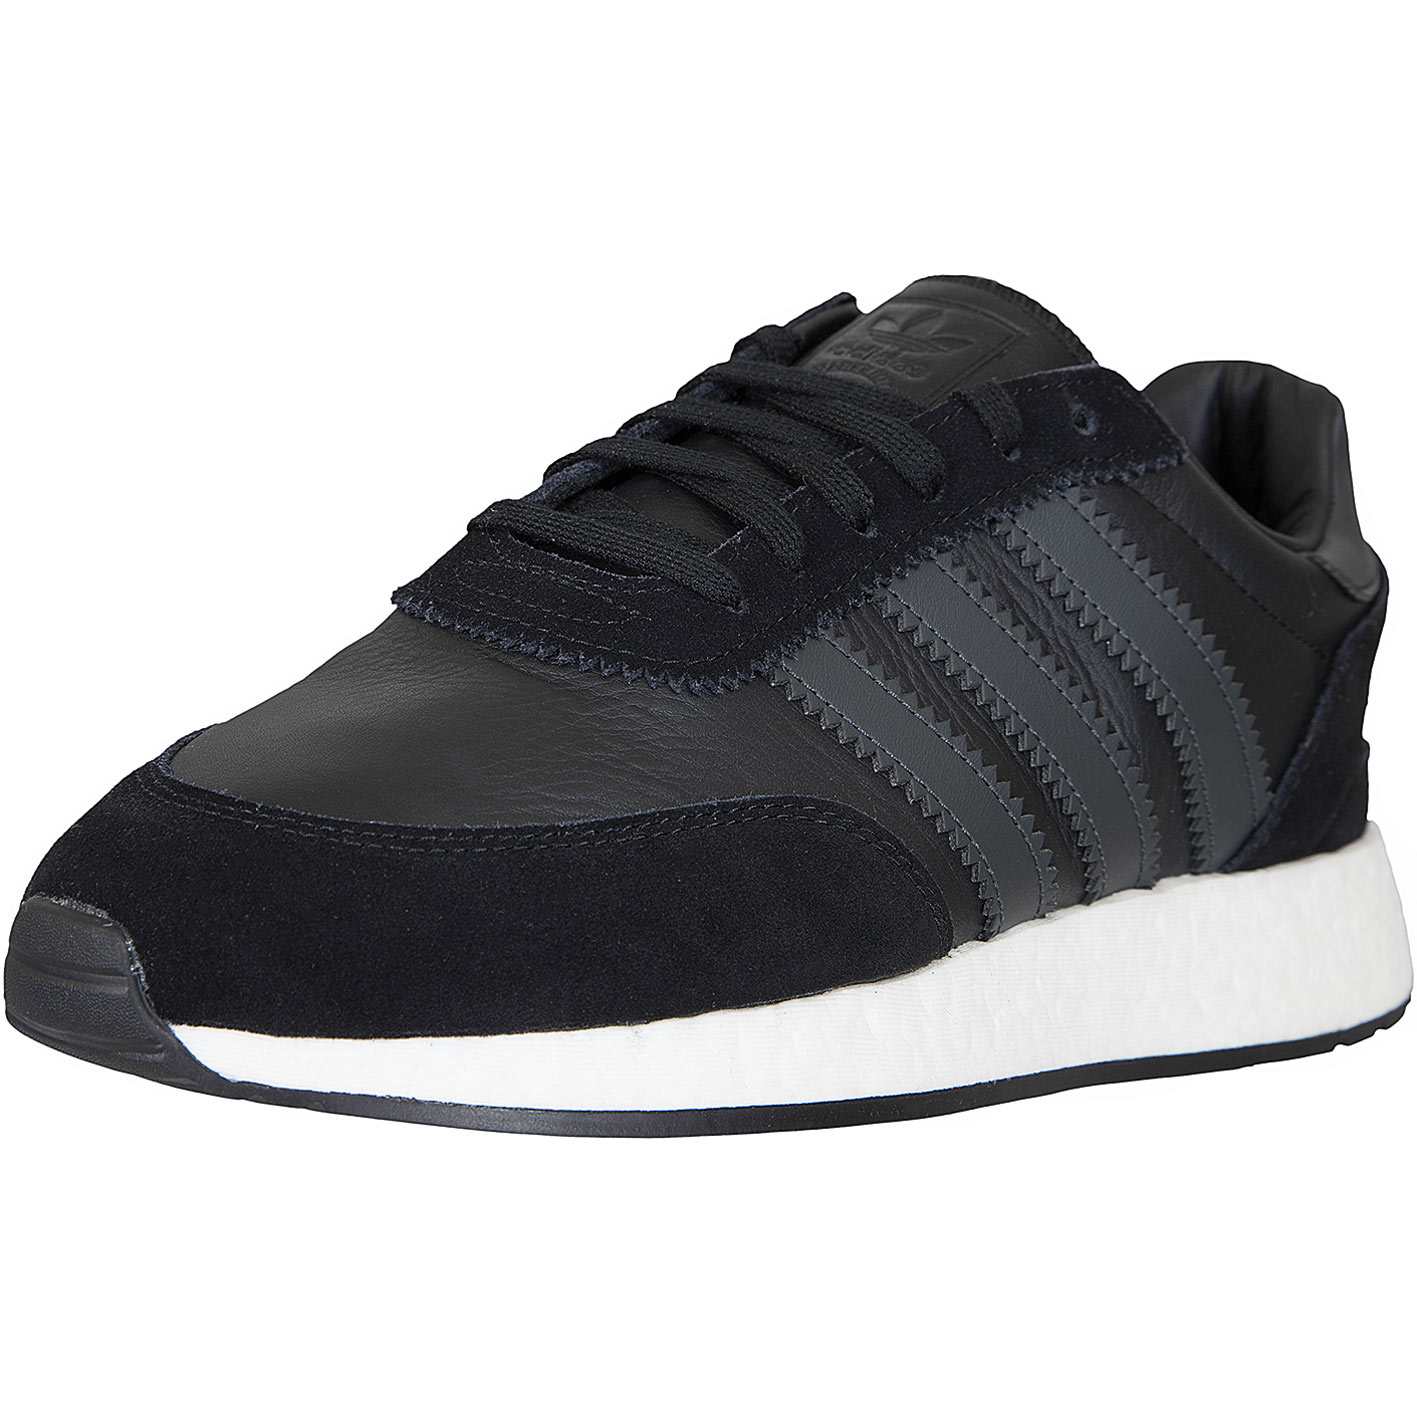 ☆ Adidas Originals Sneaker I-5923 schwarz - hier bestellen!